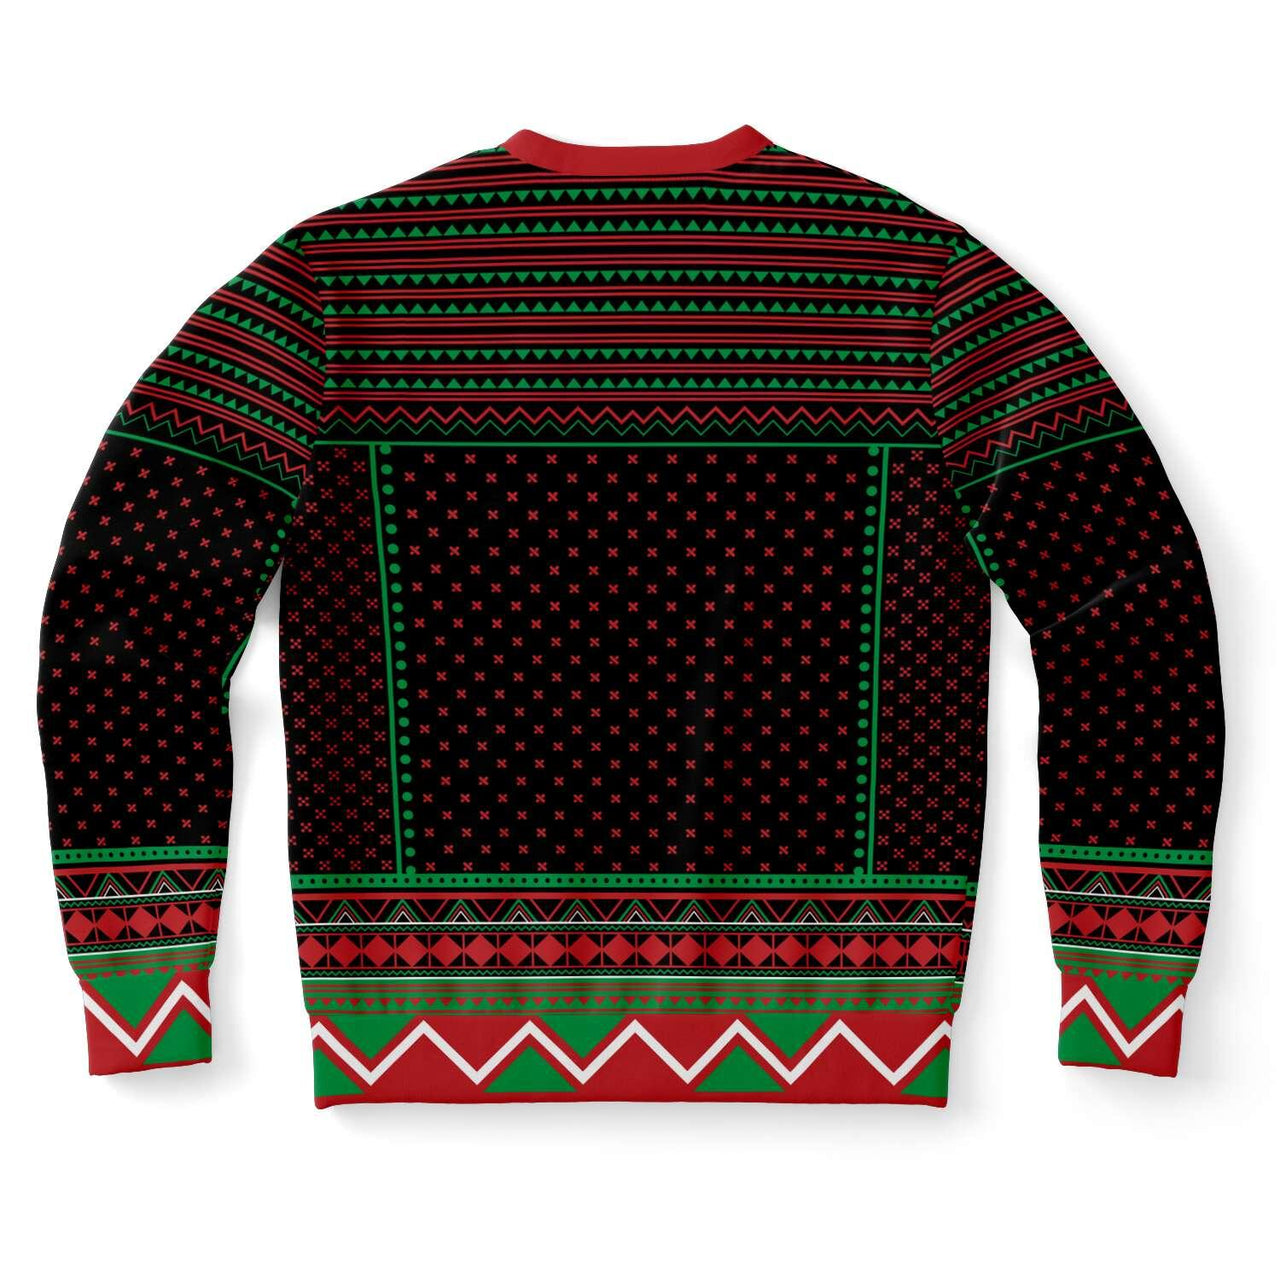 Define Naughty - Ugly Christmas Unisex Sweatshirt - Tranzitions Organic Salon